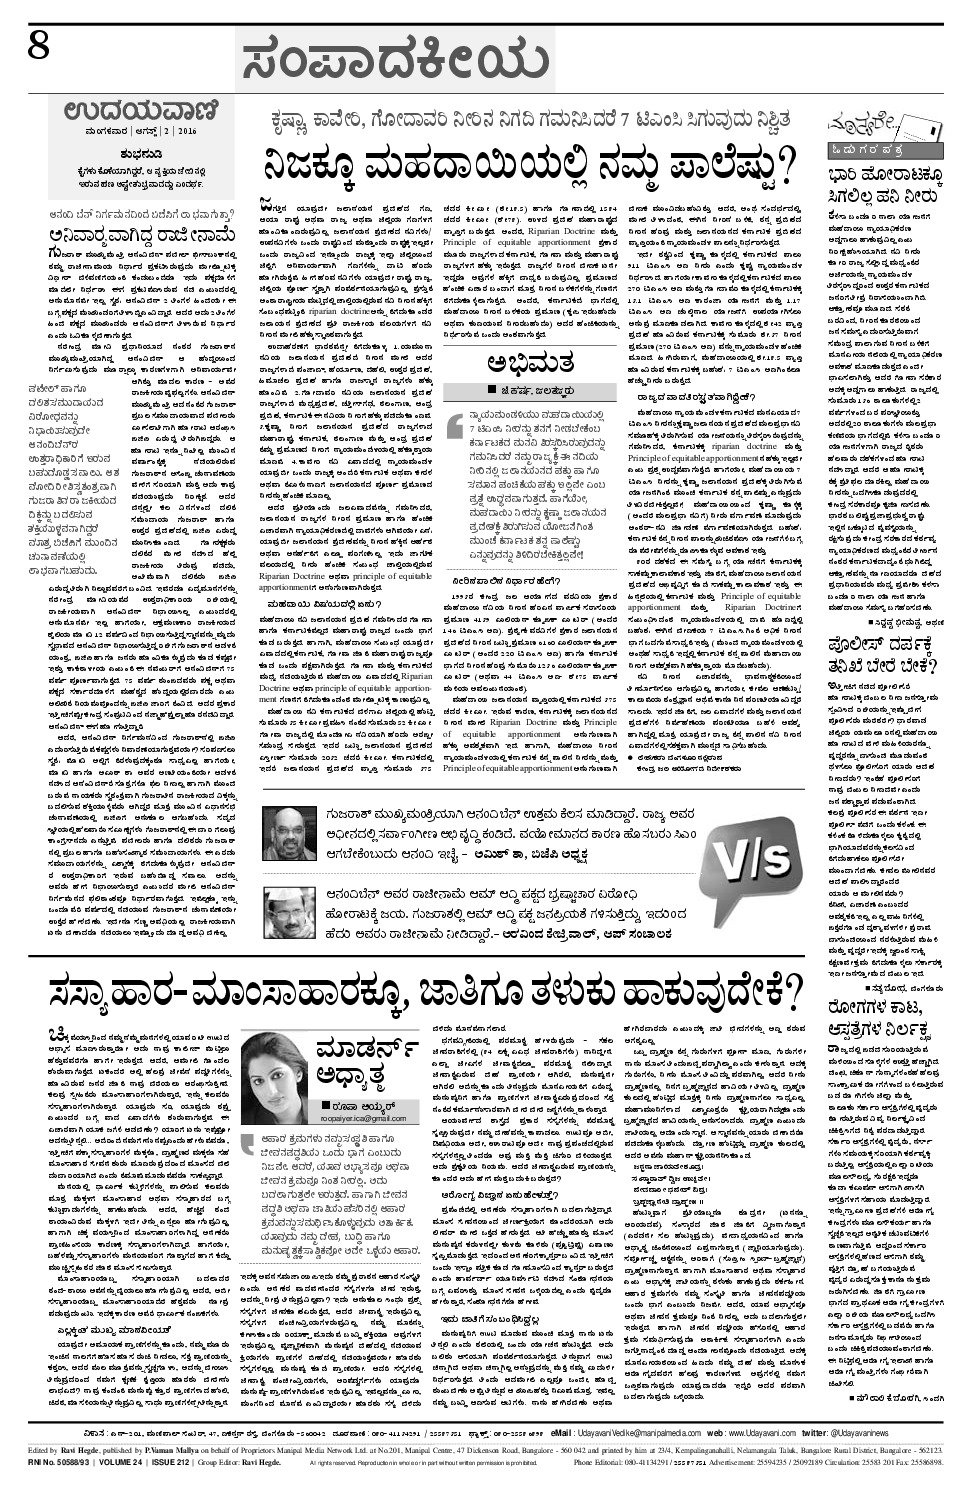 My article on Mahadayi water dispute between Indian states of Karnataka, Goa and Maharastra, published in native Kannada language daily news Uda...